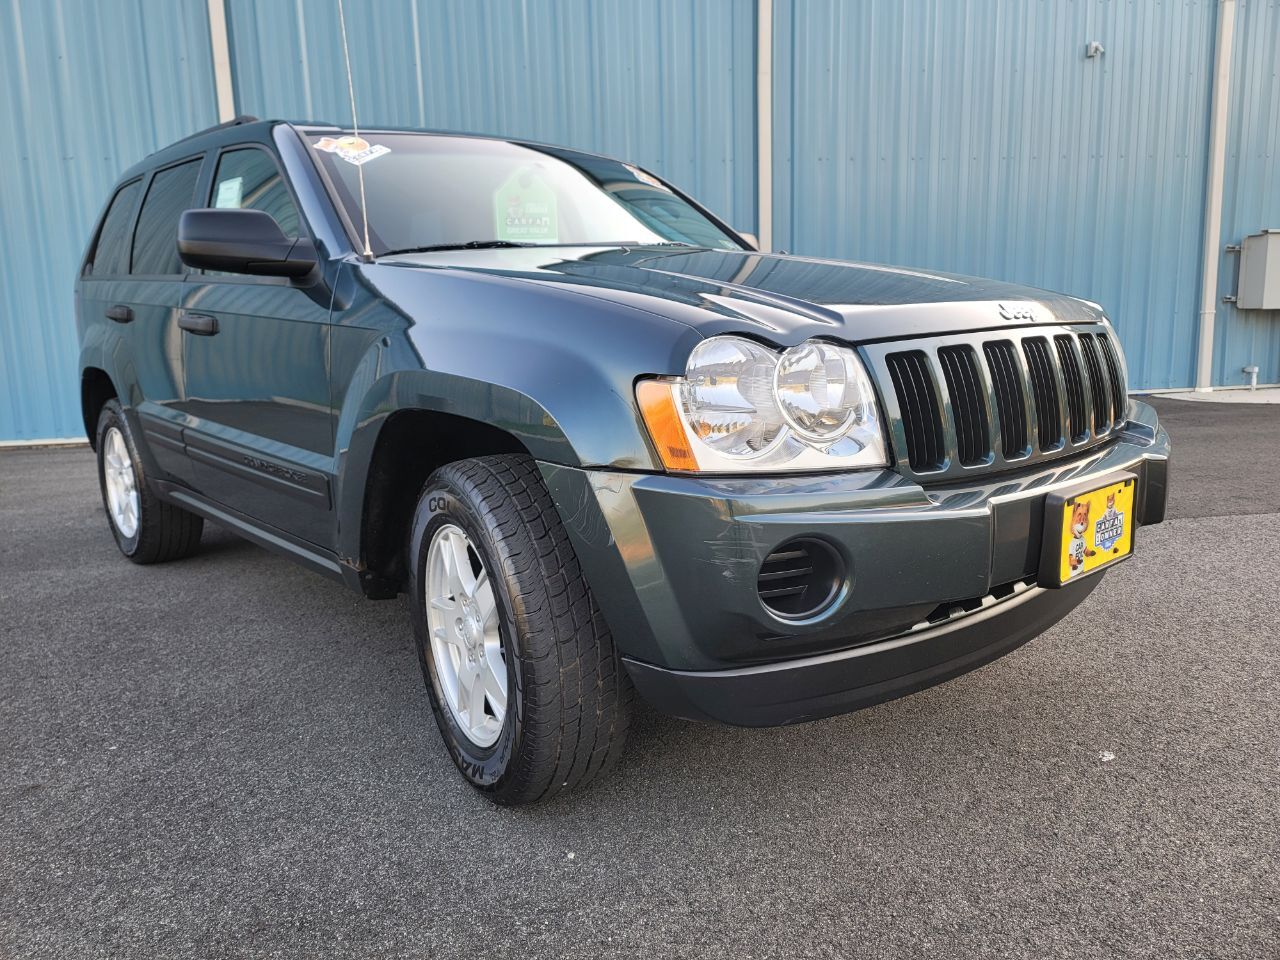 2005 Jeep Grand Cherokee For Sale - Carsforsale.com®